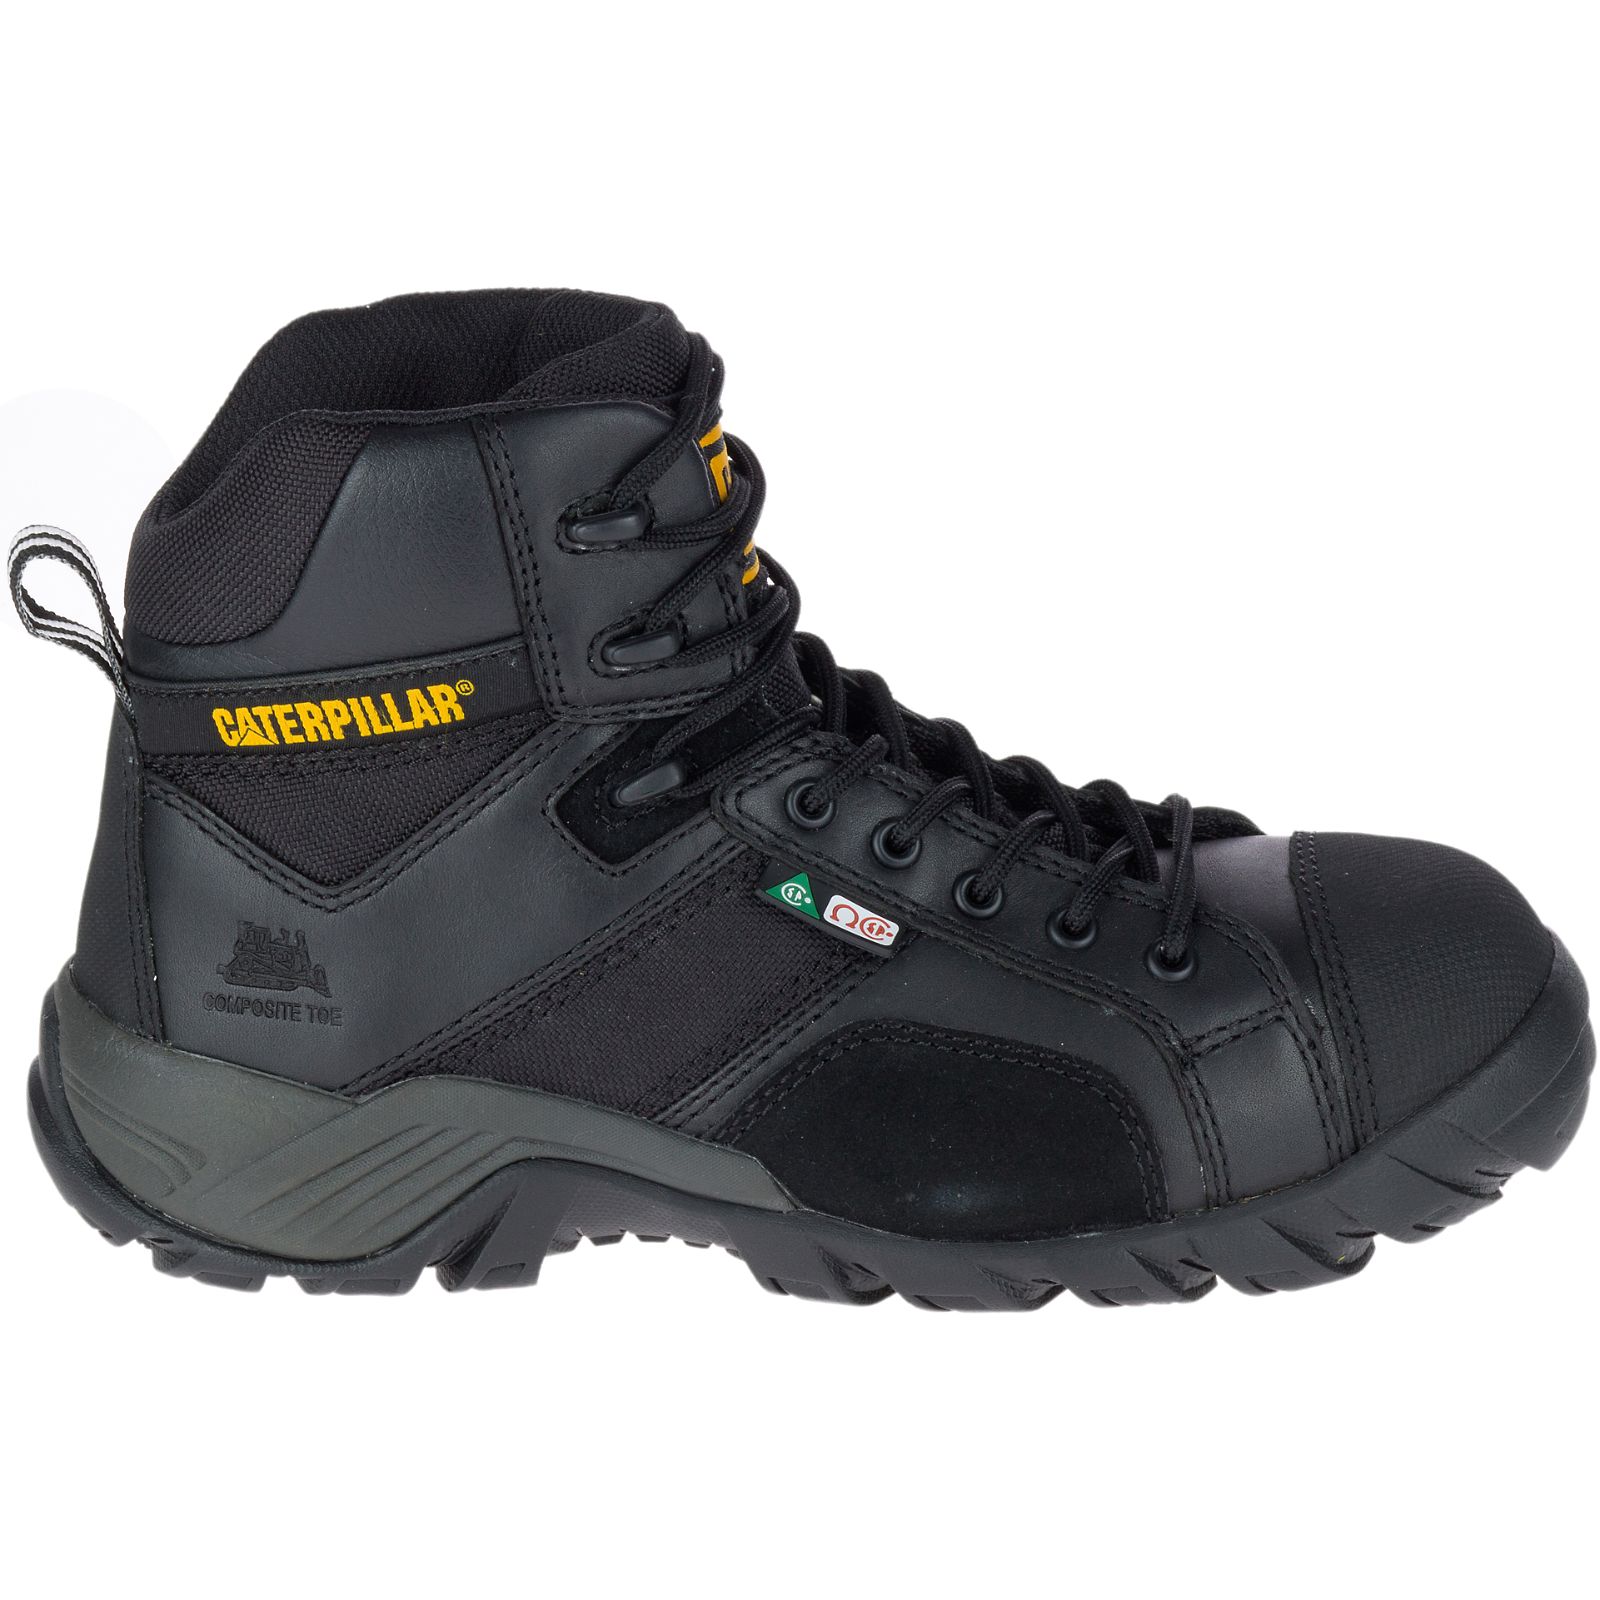 Caterpillar Work Boots Sharjah - Caterpillar Argon Hi Composite Toe Csa Womens - Black LQYDTP854